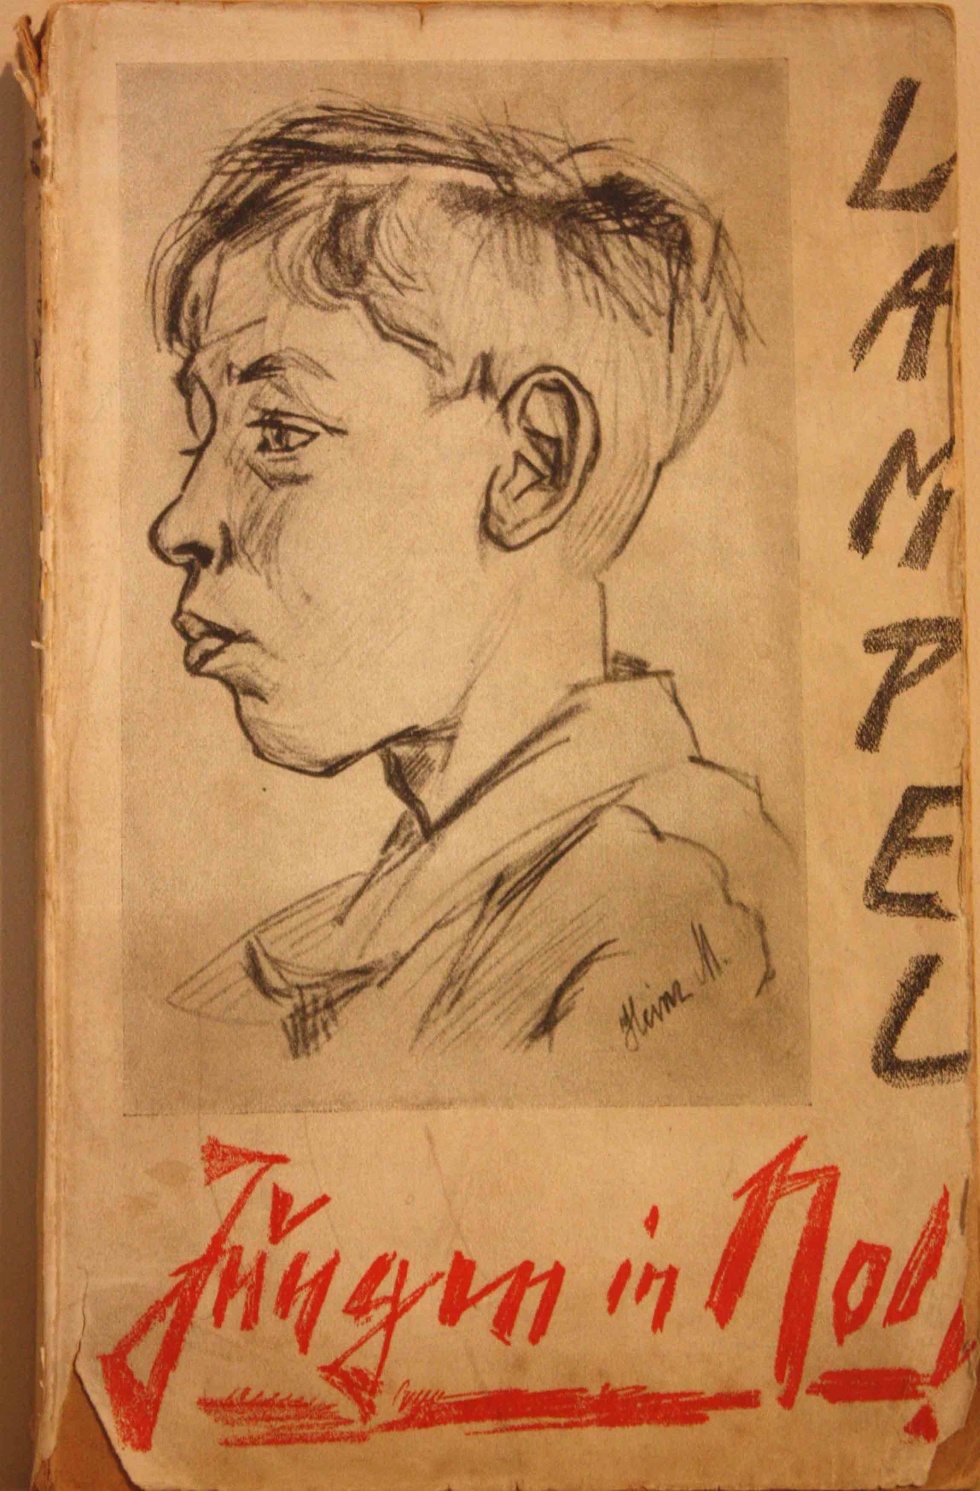 Jungen in Not, 1928 (Kurt Tucholsky Literaturmuseum CC BY-NC-SA)